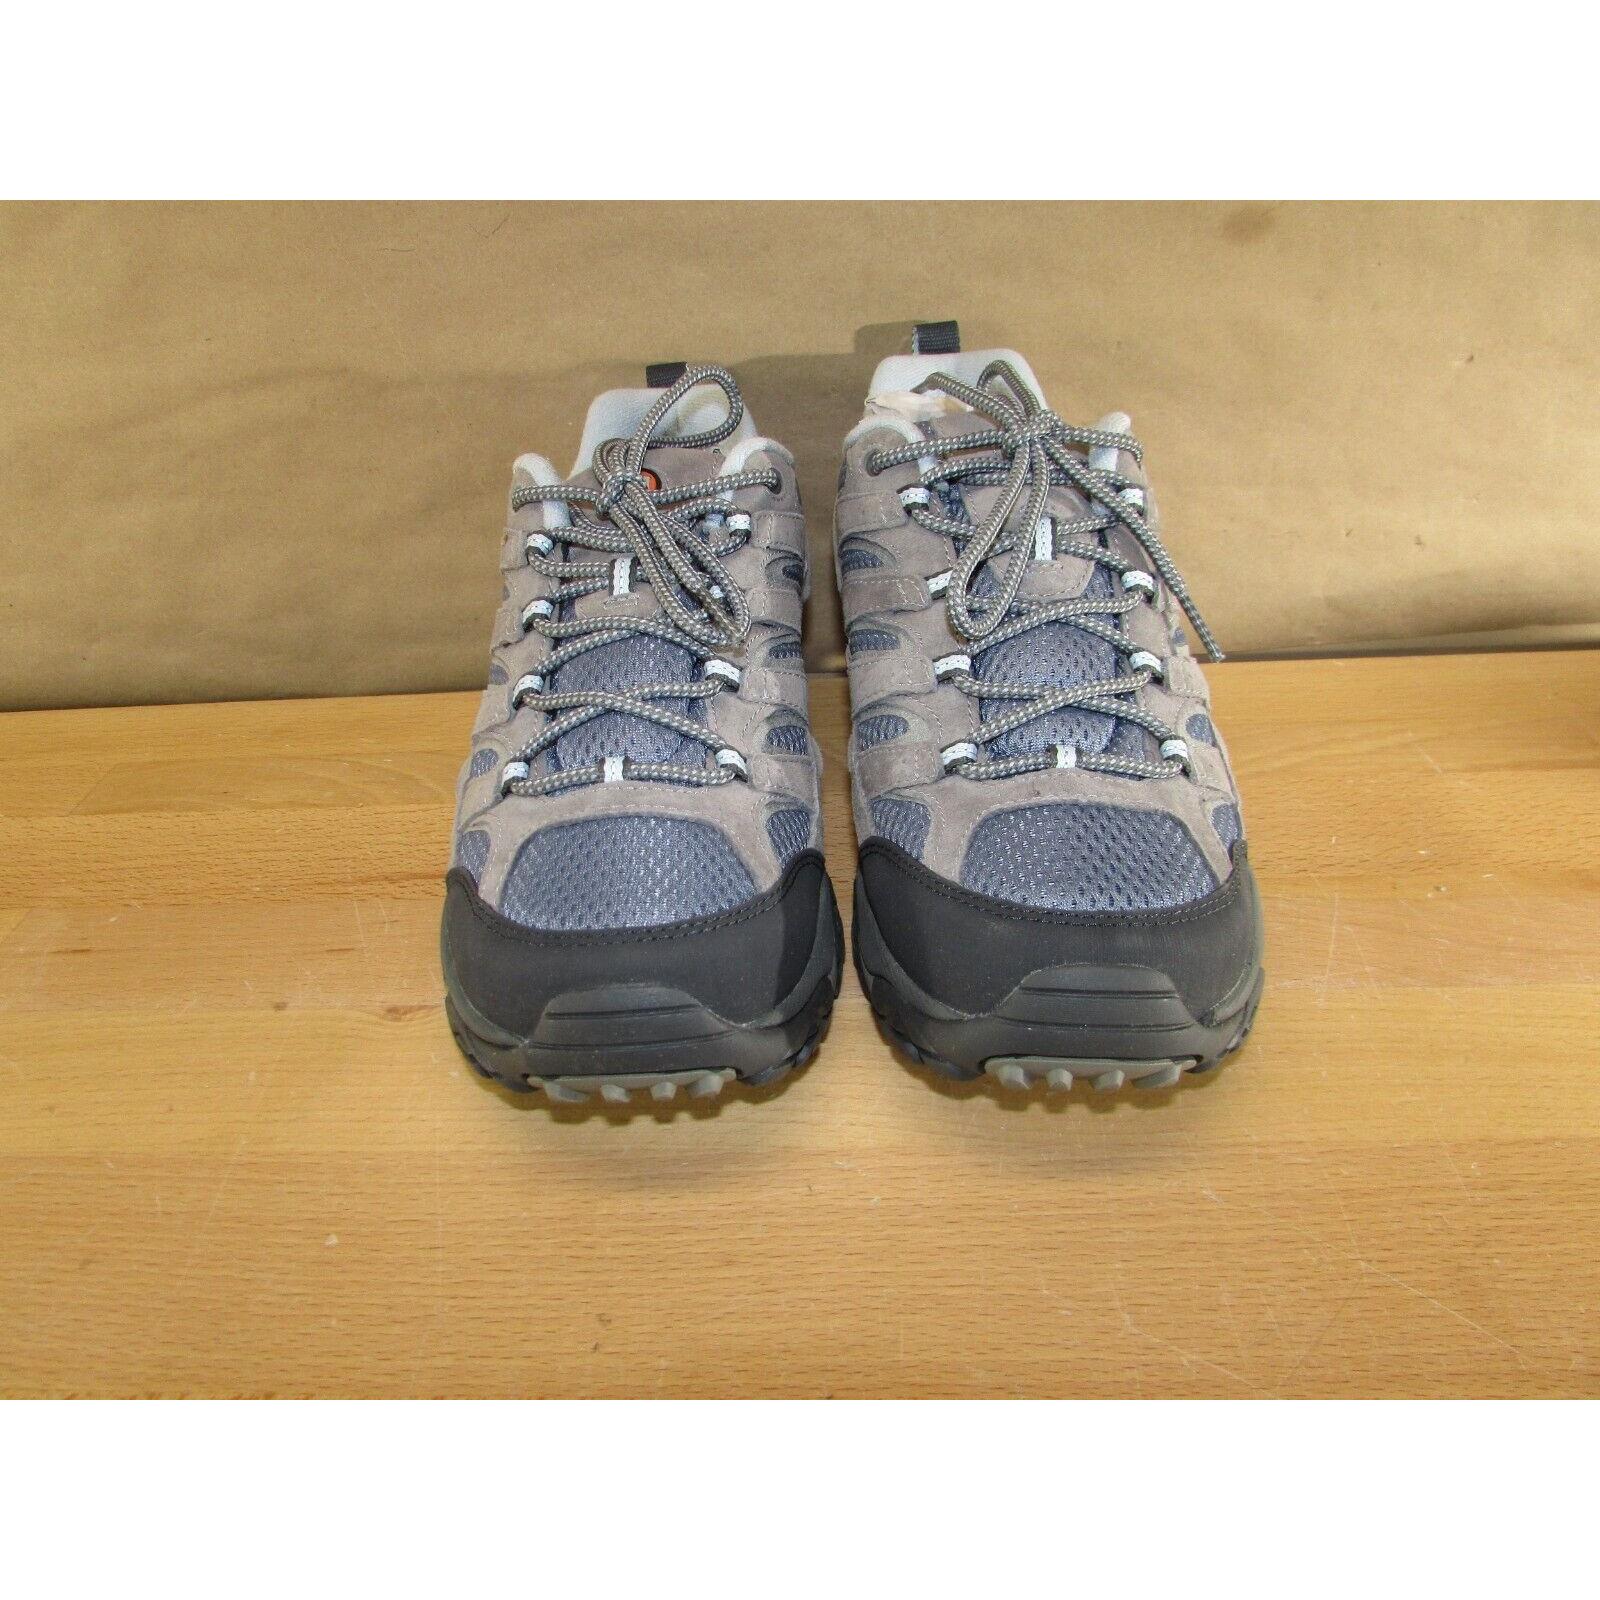 Merrell shoes  - Gray 0